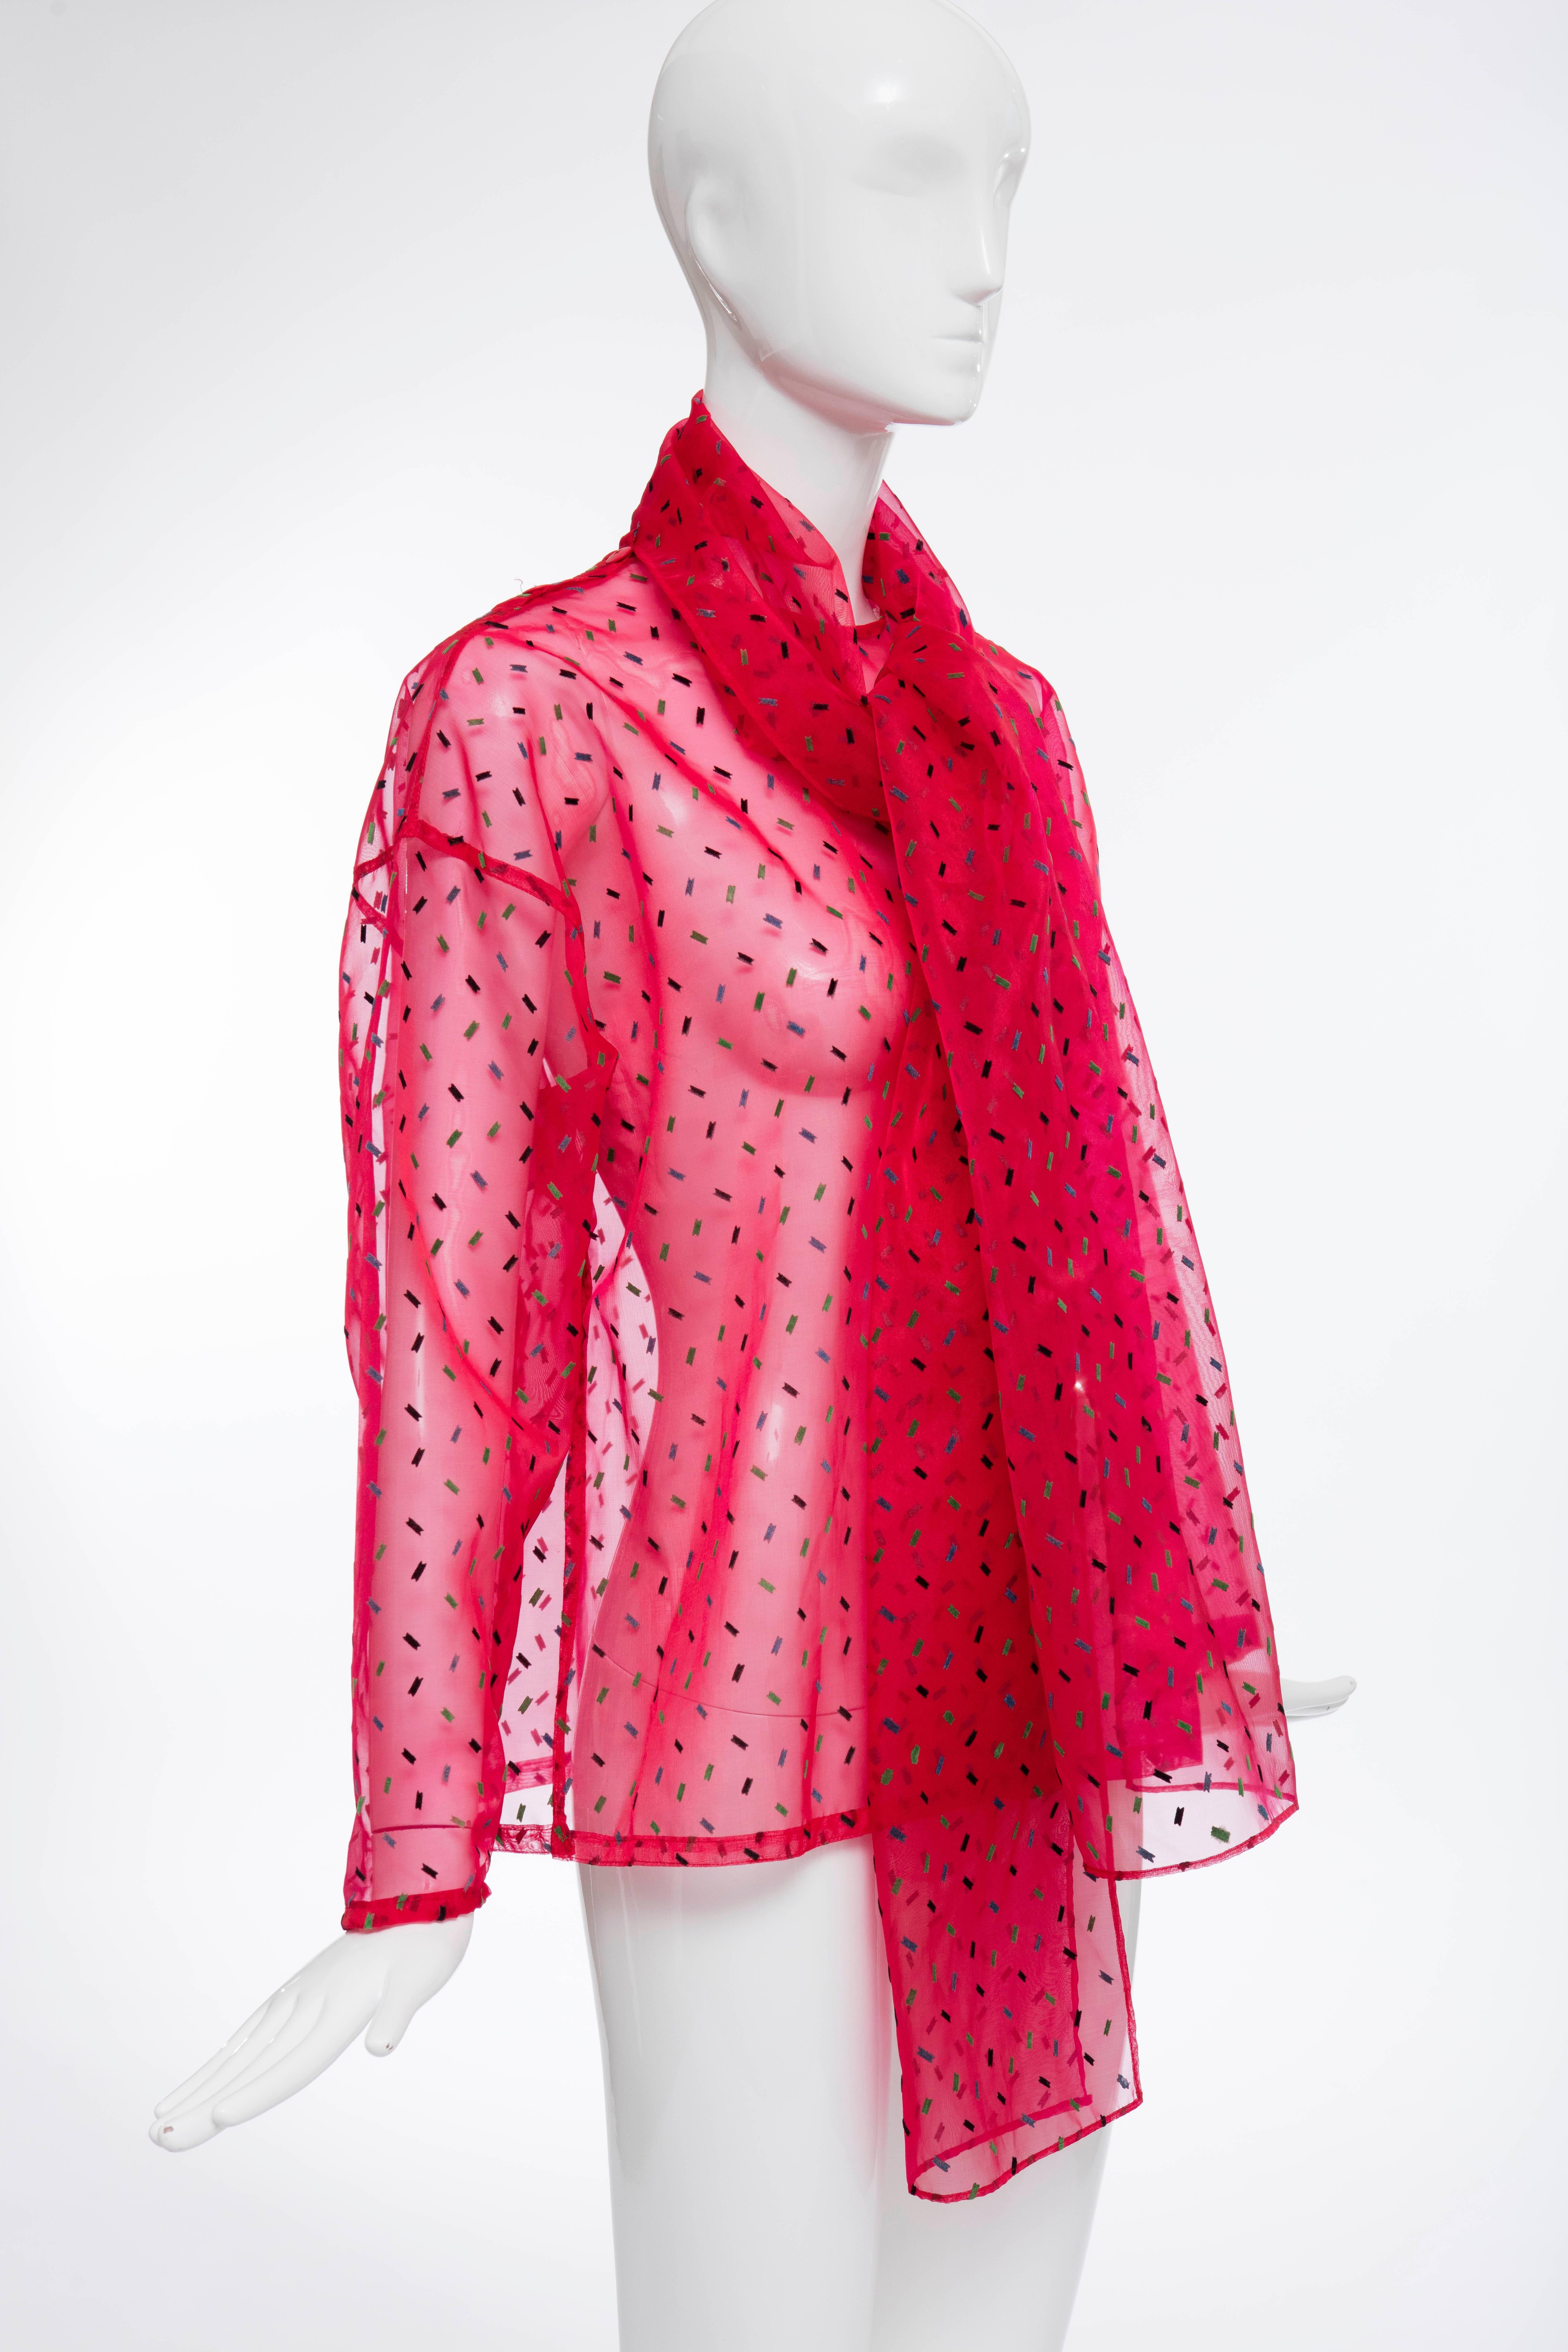 Kansai Yamamoto Red Sheer Silk Nylon Velvet Flecks Top & Scarf, Circa 1980's For Sale 1